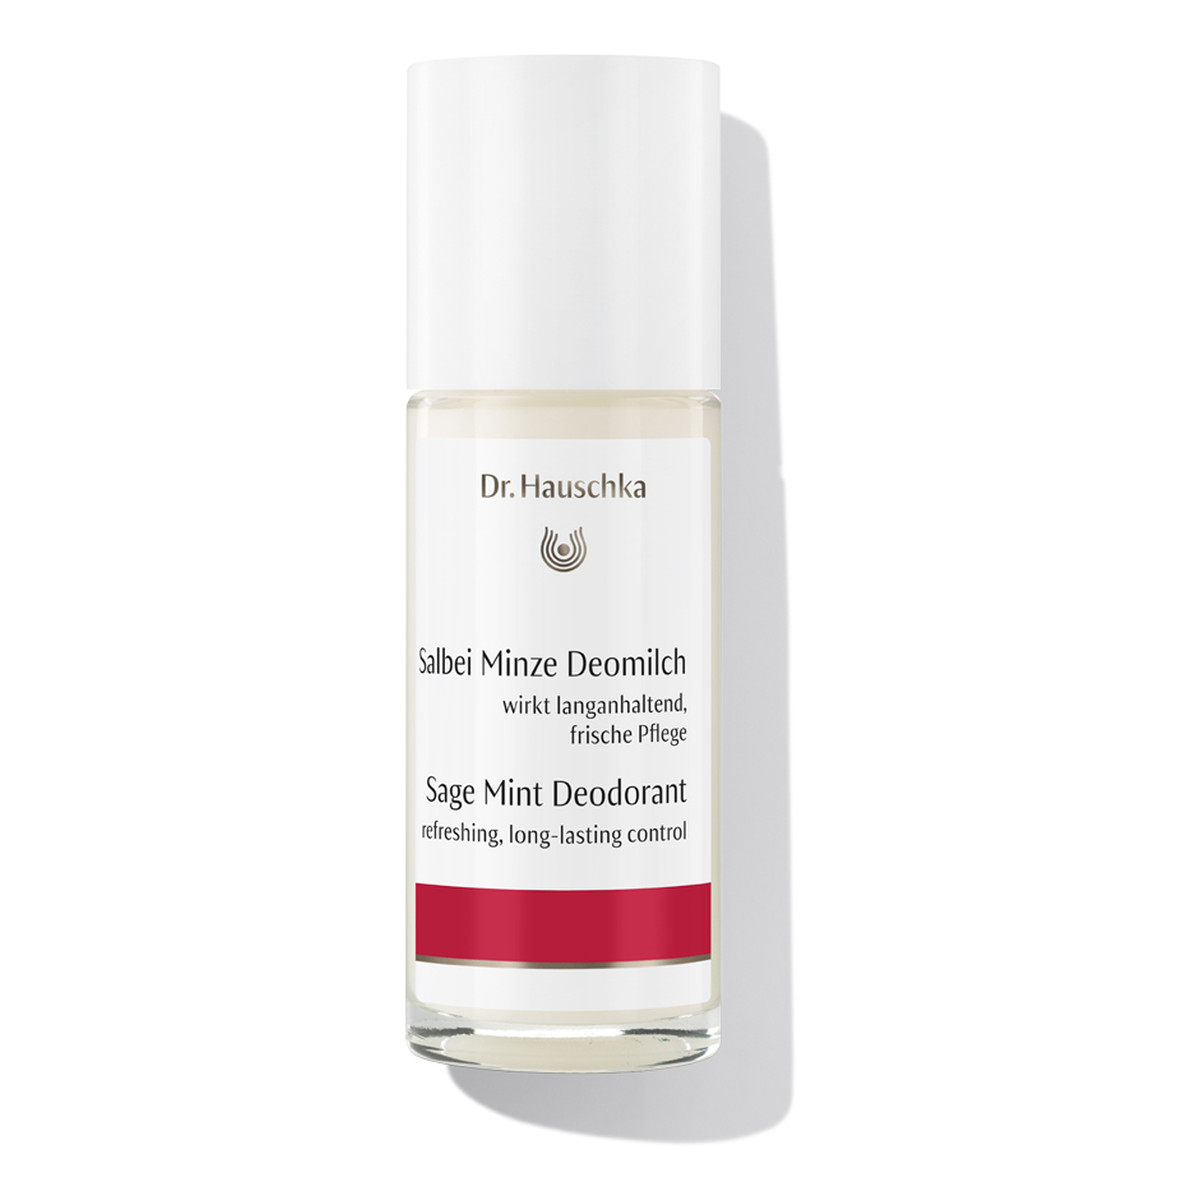 Dr. Hauschka Deodorant Refreshing Long-Lasting Control Dezodorant sage & mint 50ml